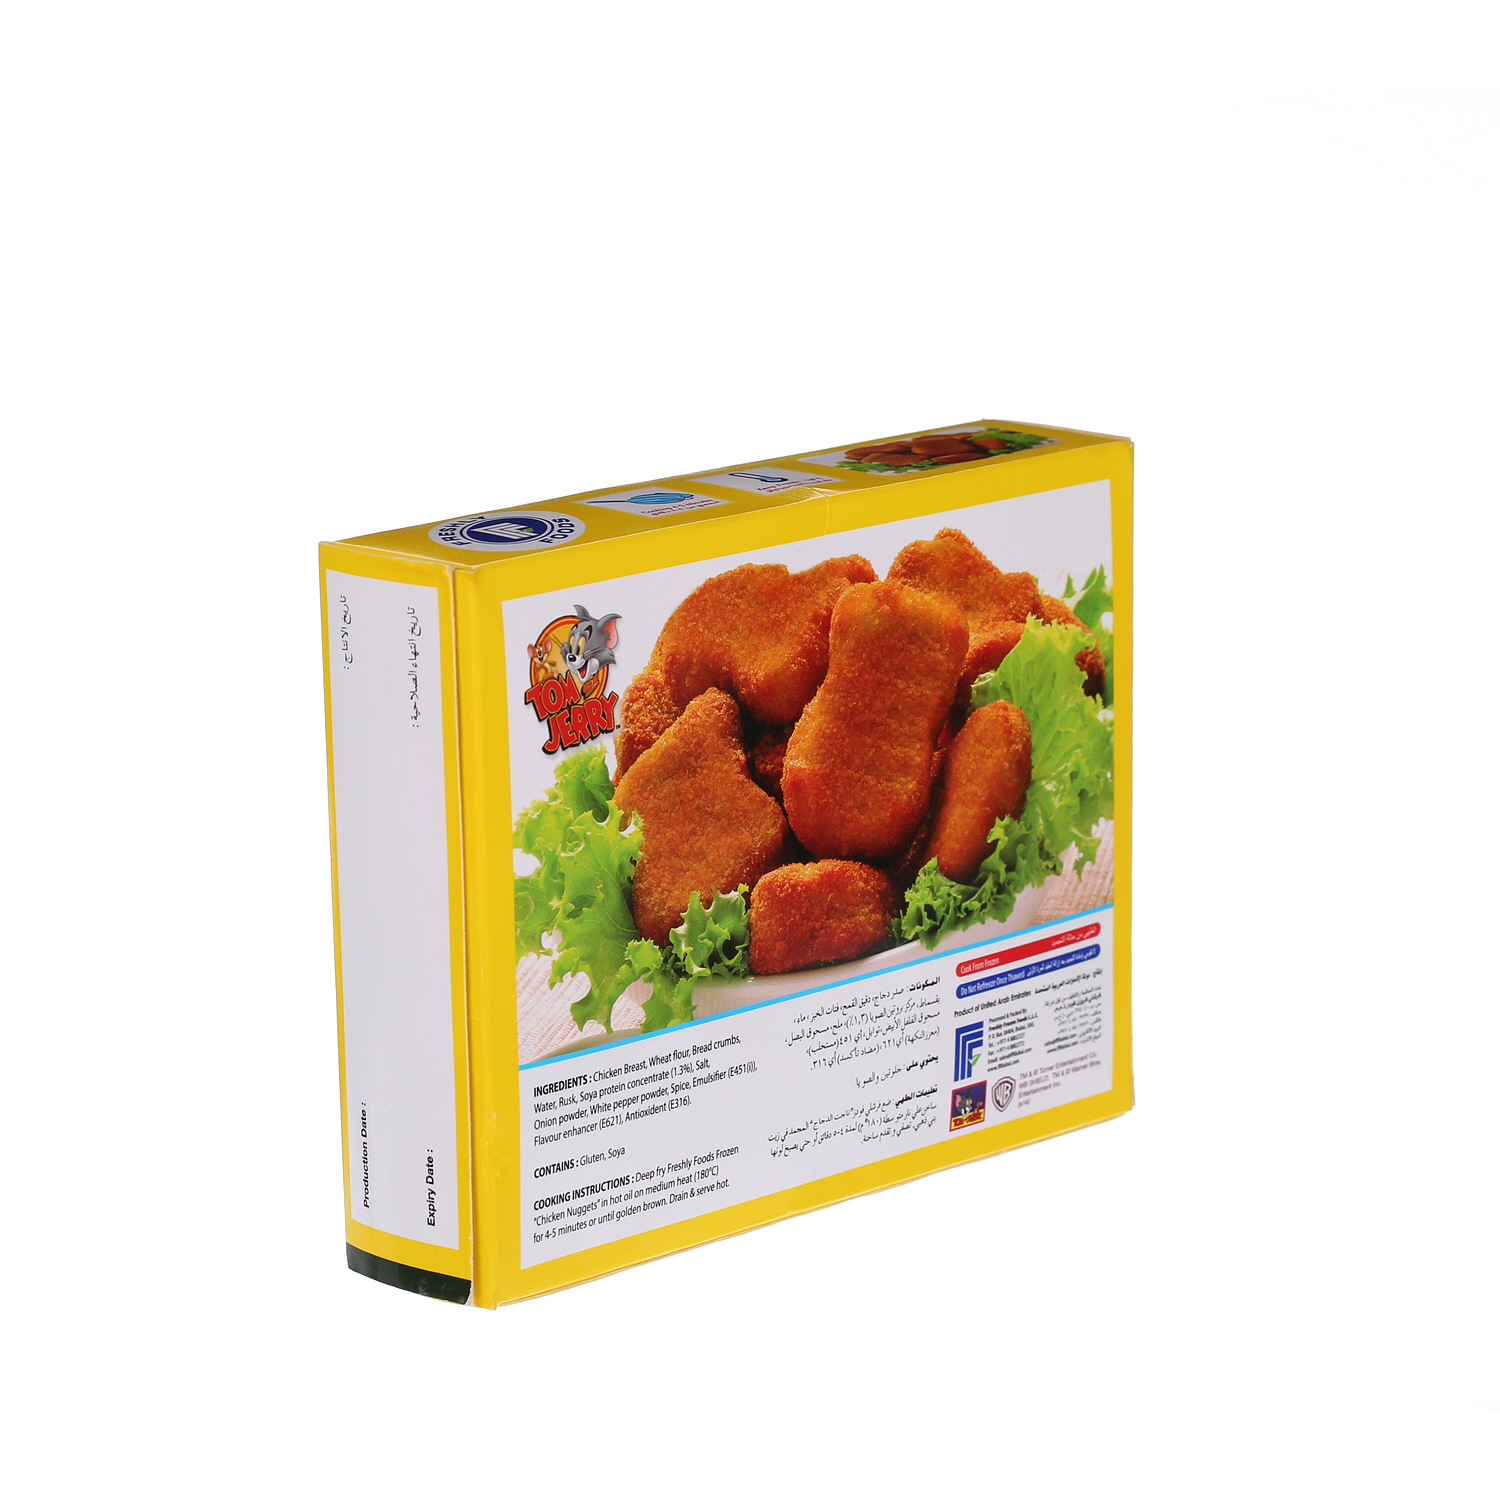 Freshly Foods Chicken Nuggets 200gm